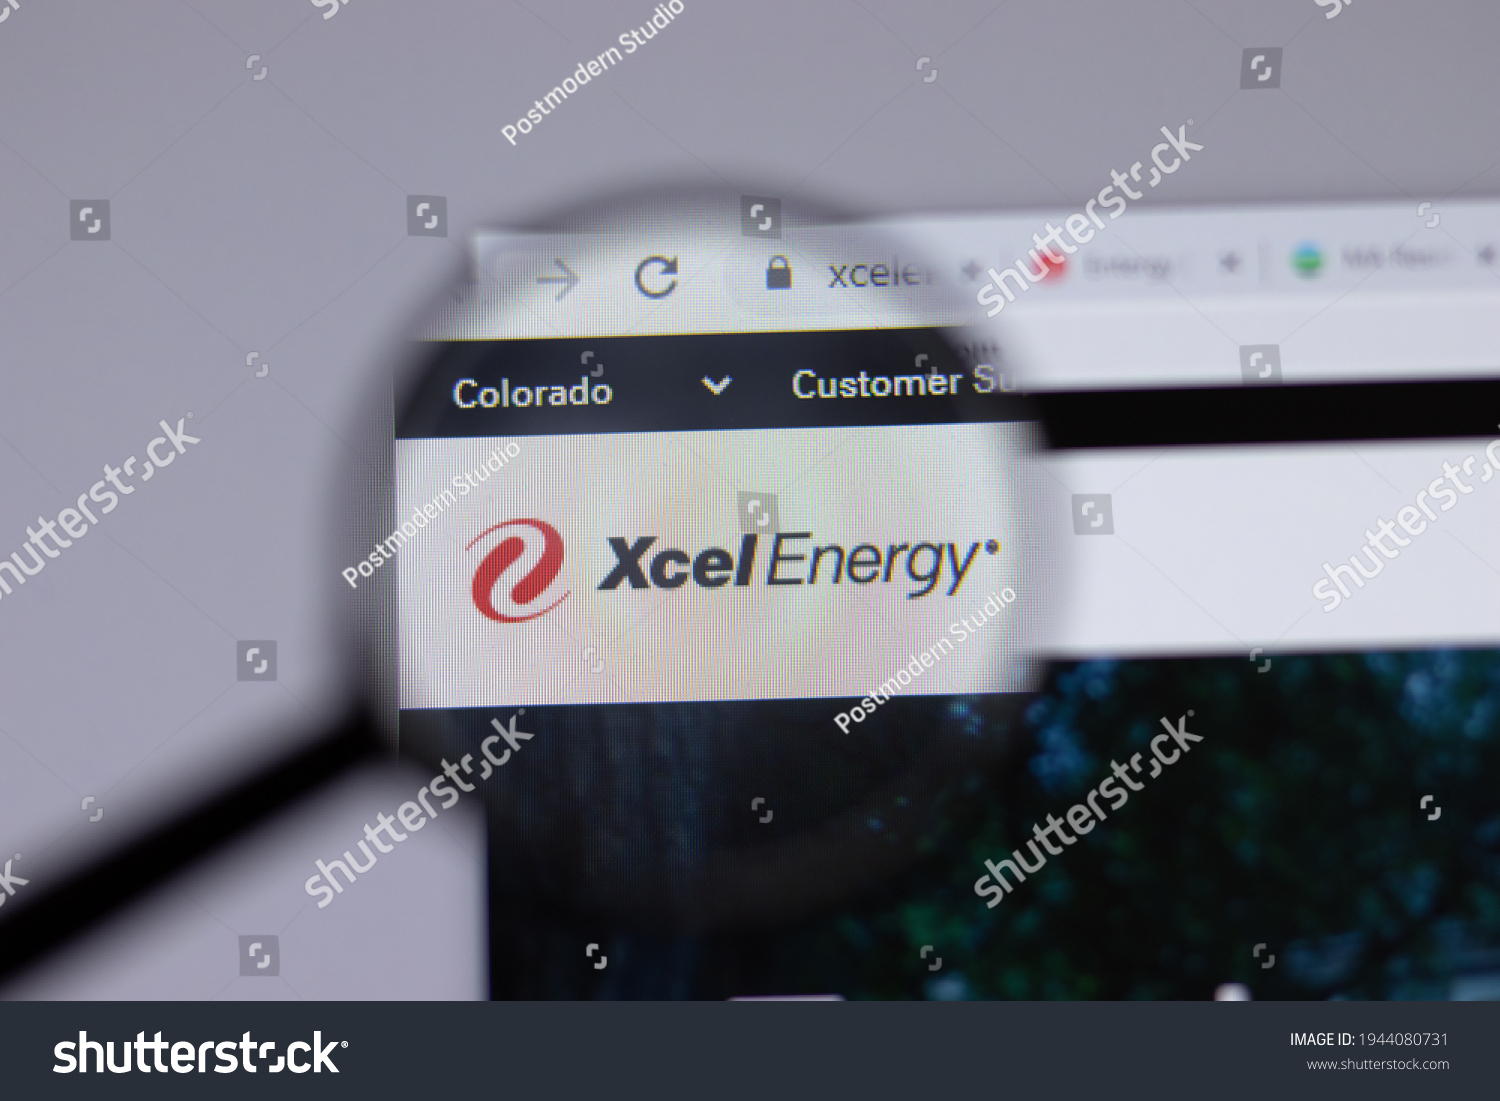 8 Xcel icon Images, Stock Photos & Vectors | Shutterstock